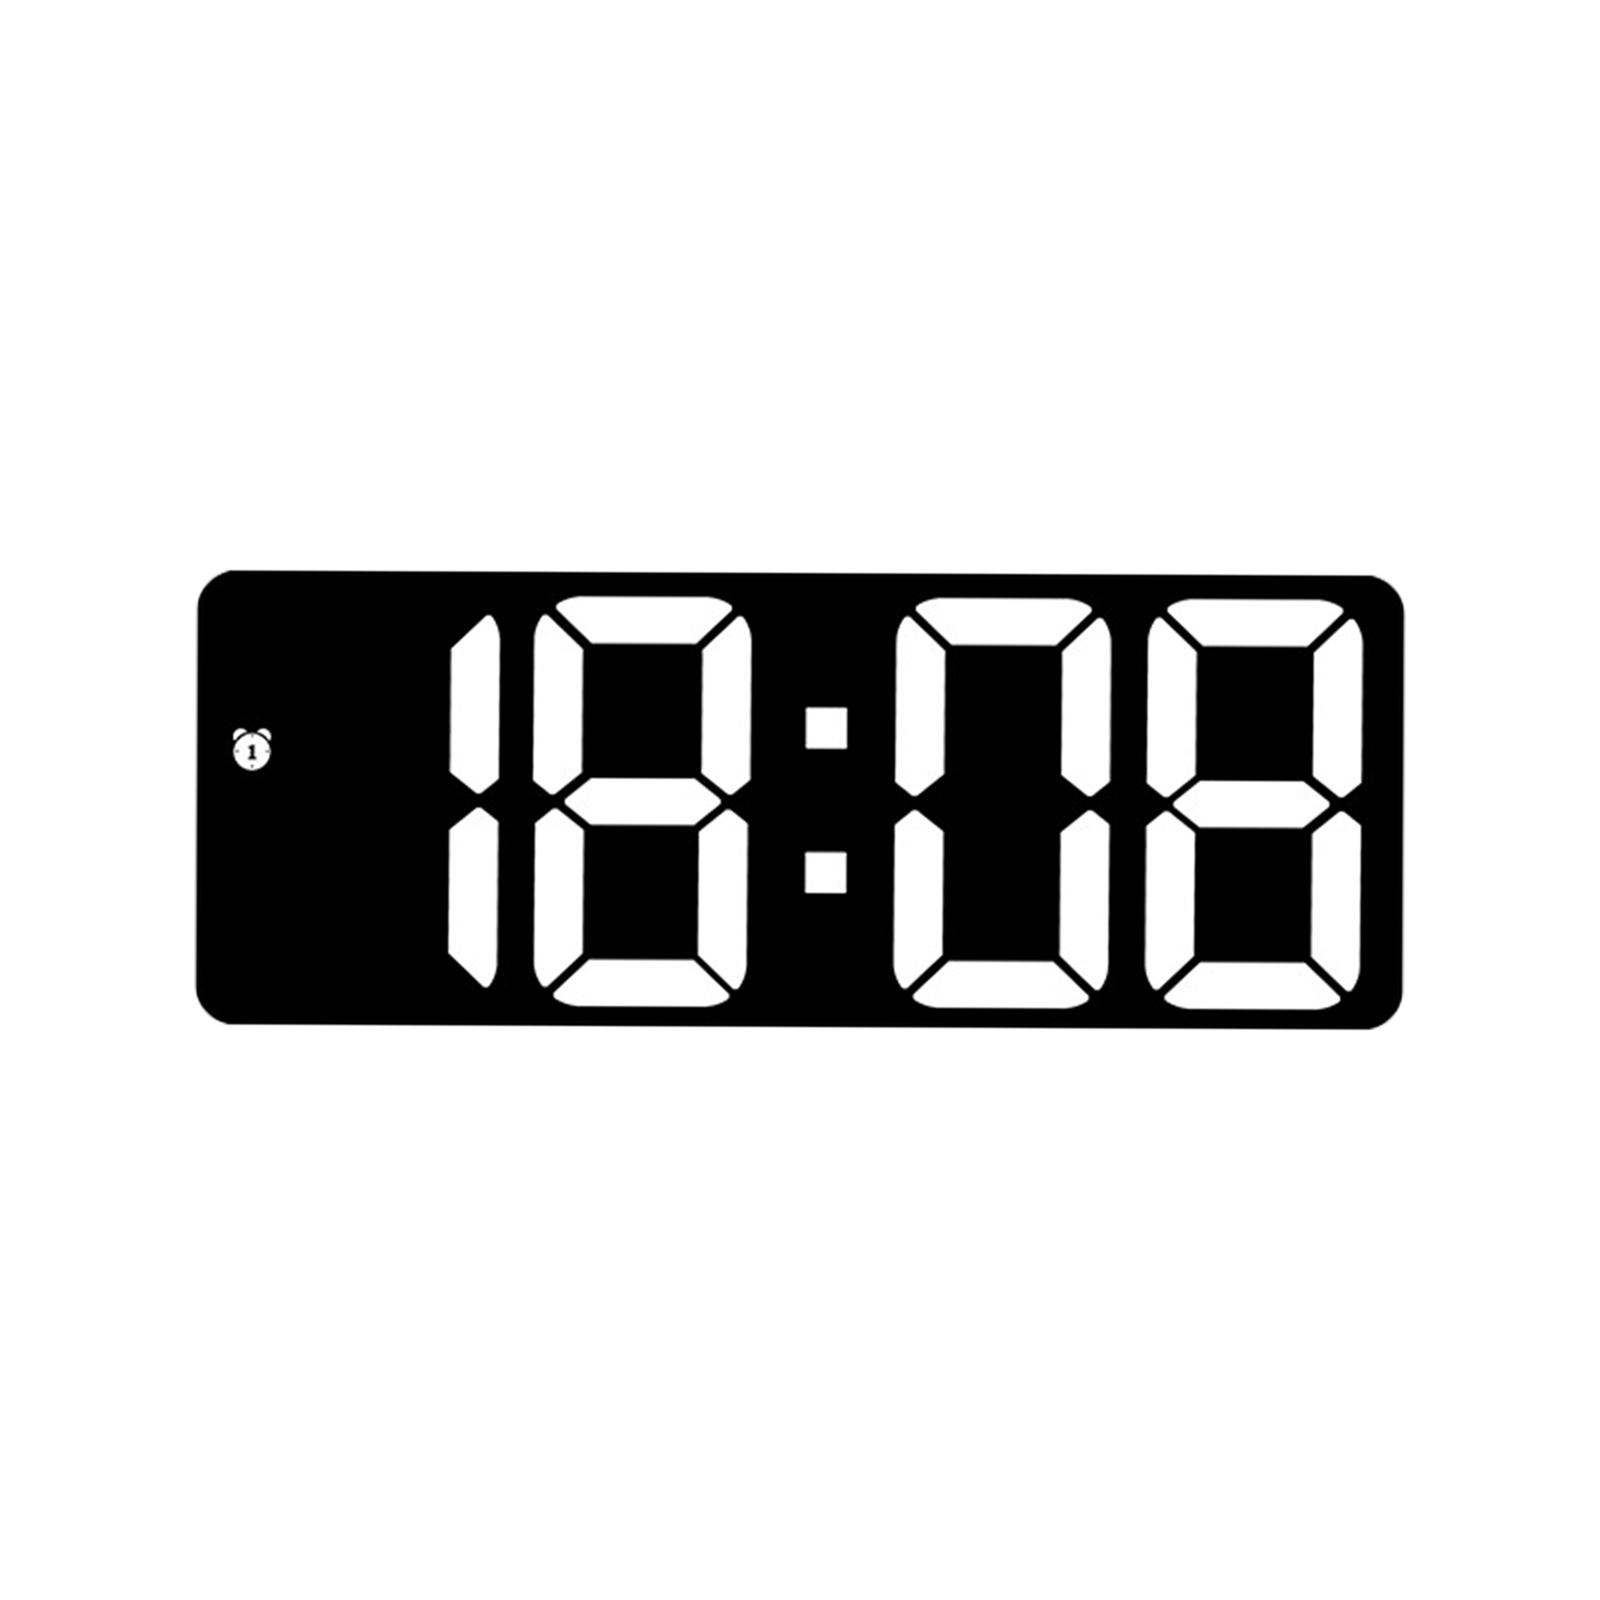 Digital Wall Clock Desk LED Desktop Alarm Clock for Living Room Adult Office White